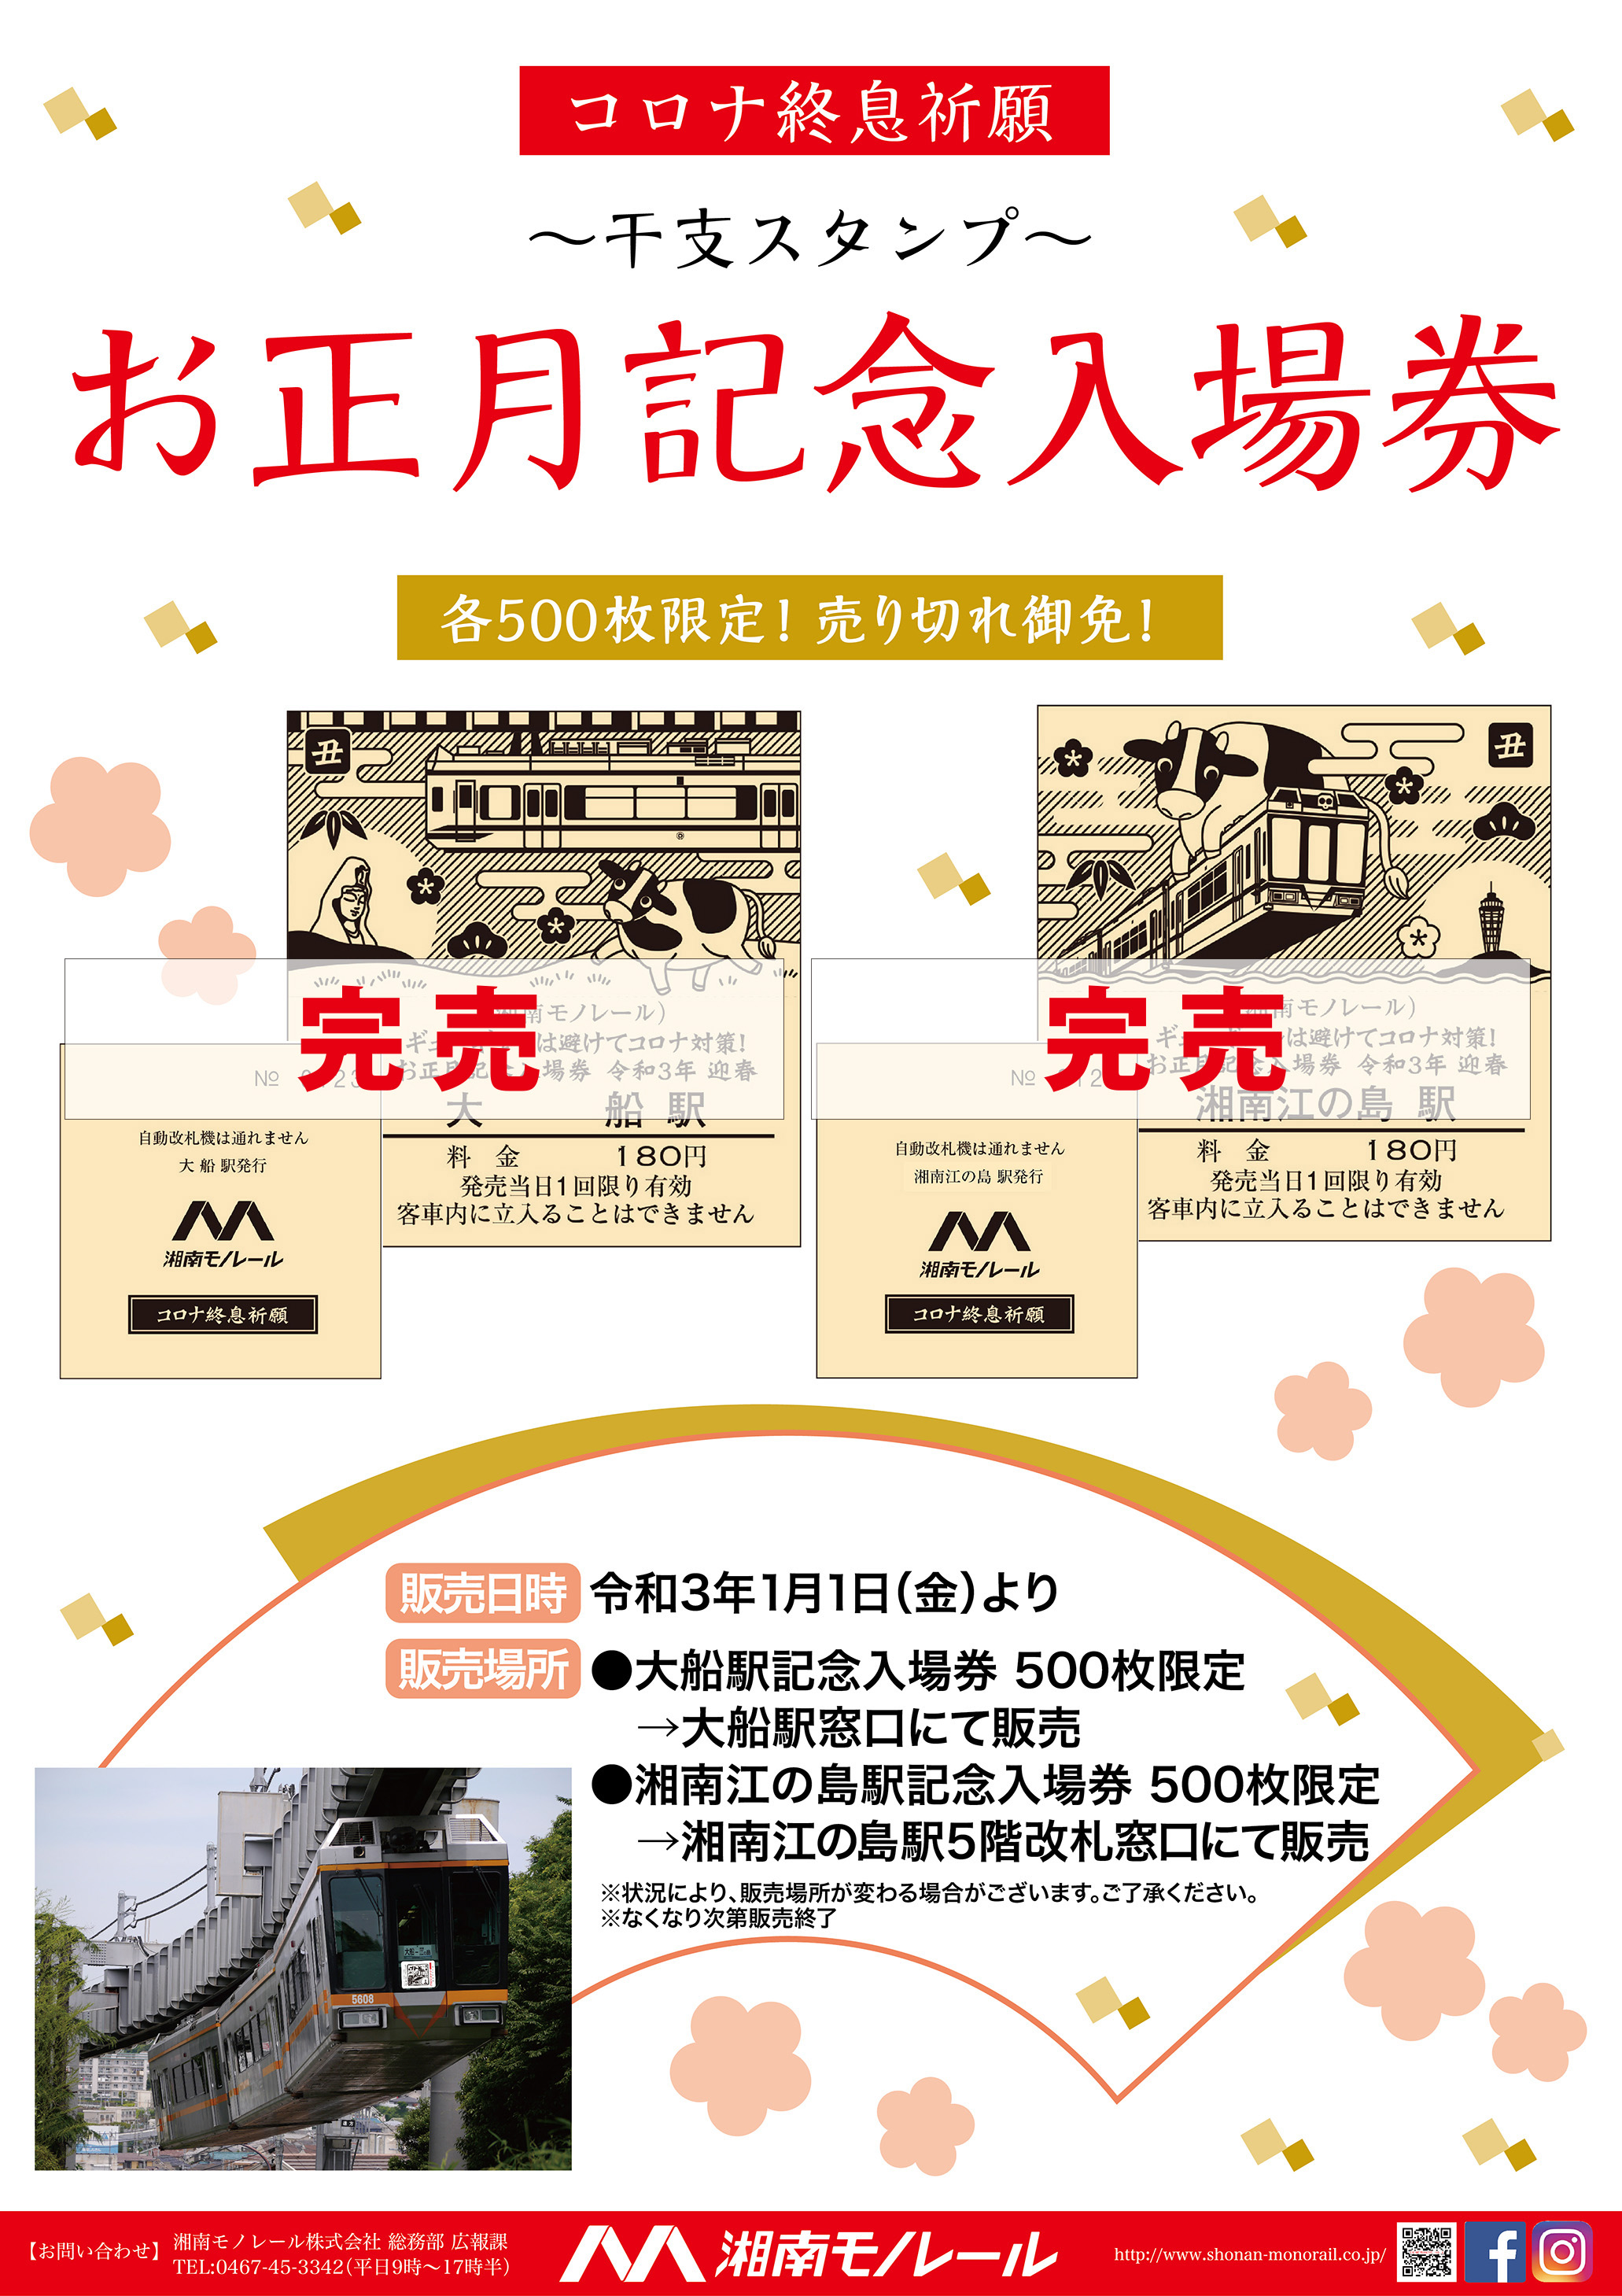 https://www.shonan-monorail.co.jp/news/upload/5c27de8bf9bf6921a30d24f8202de56589d58289.jpg